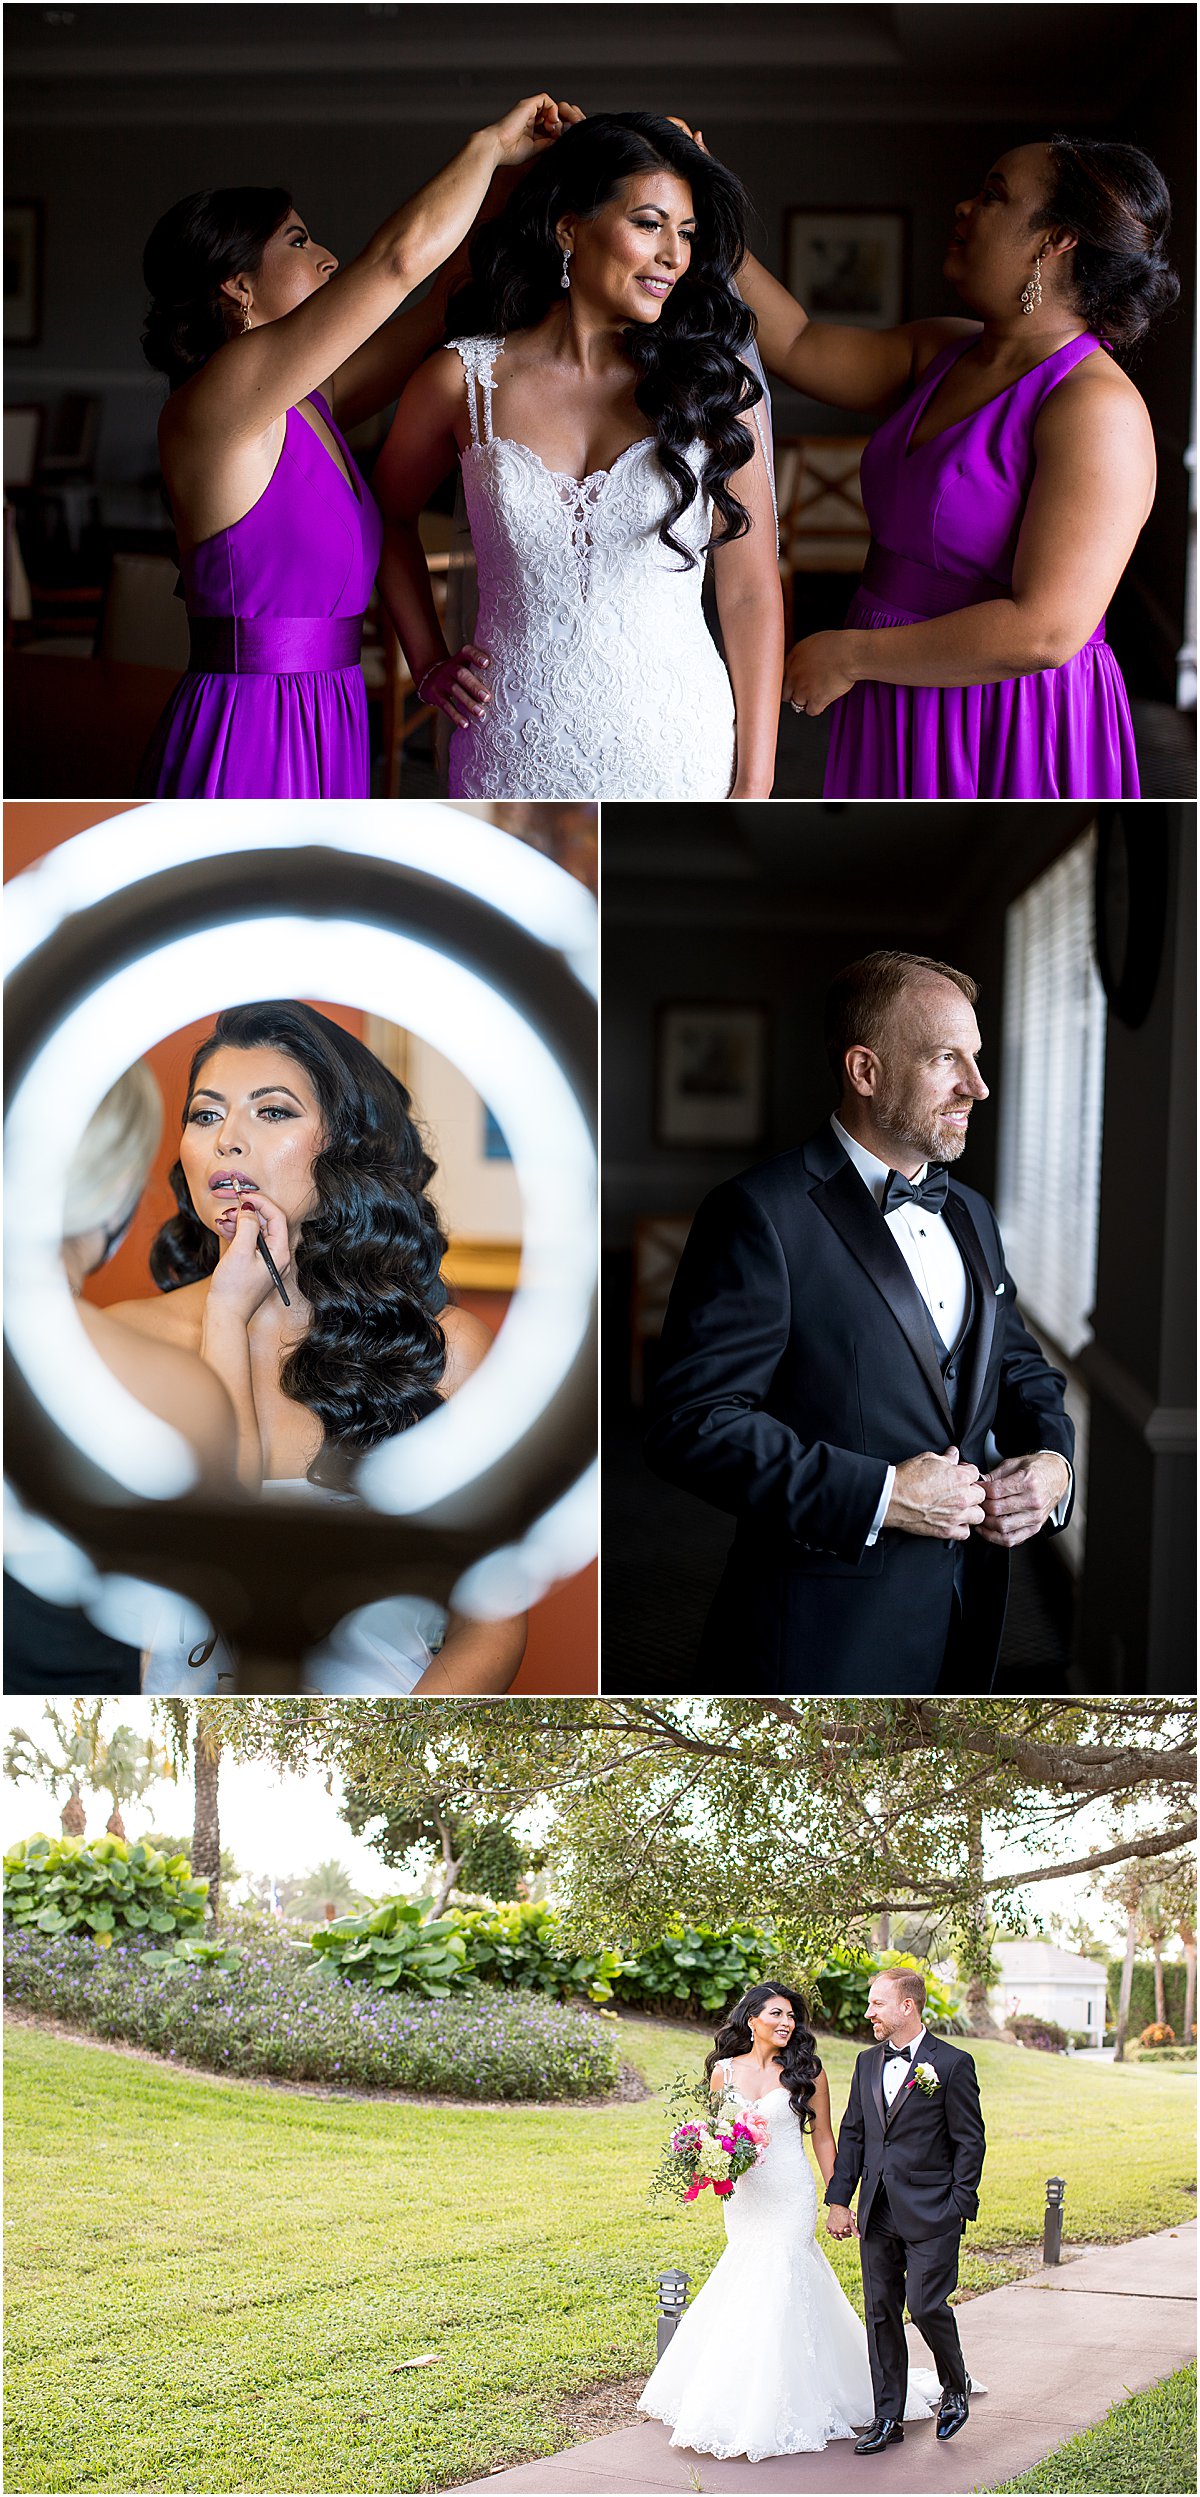 Elegant Purple, Pink, and White Wedding | Indian Spring Country Club | Boynton Beach Florida | Married in Palm Beach | www.marriedinpalmbeach.com | Poirier Wedding Photography